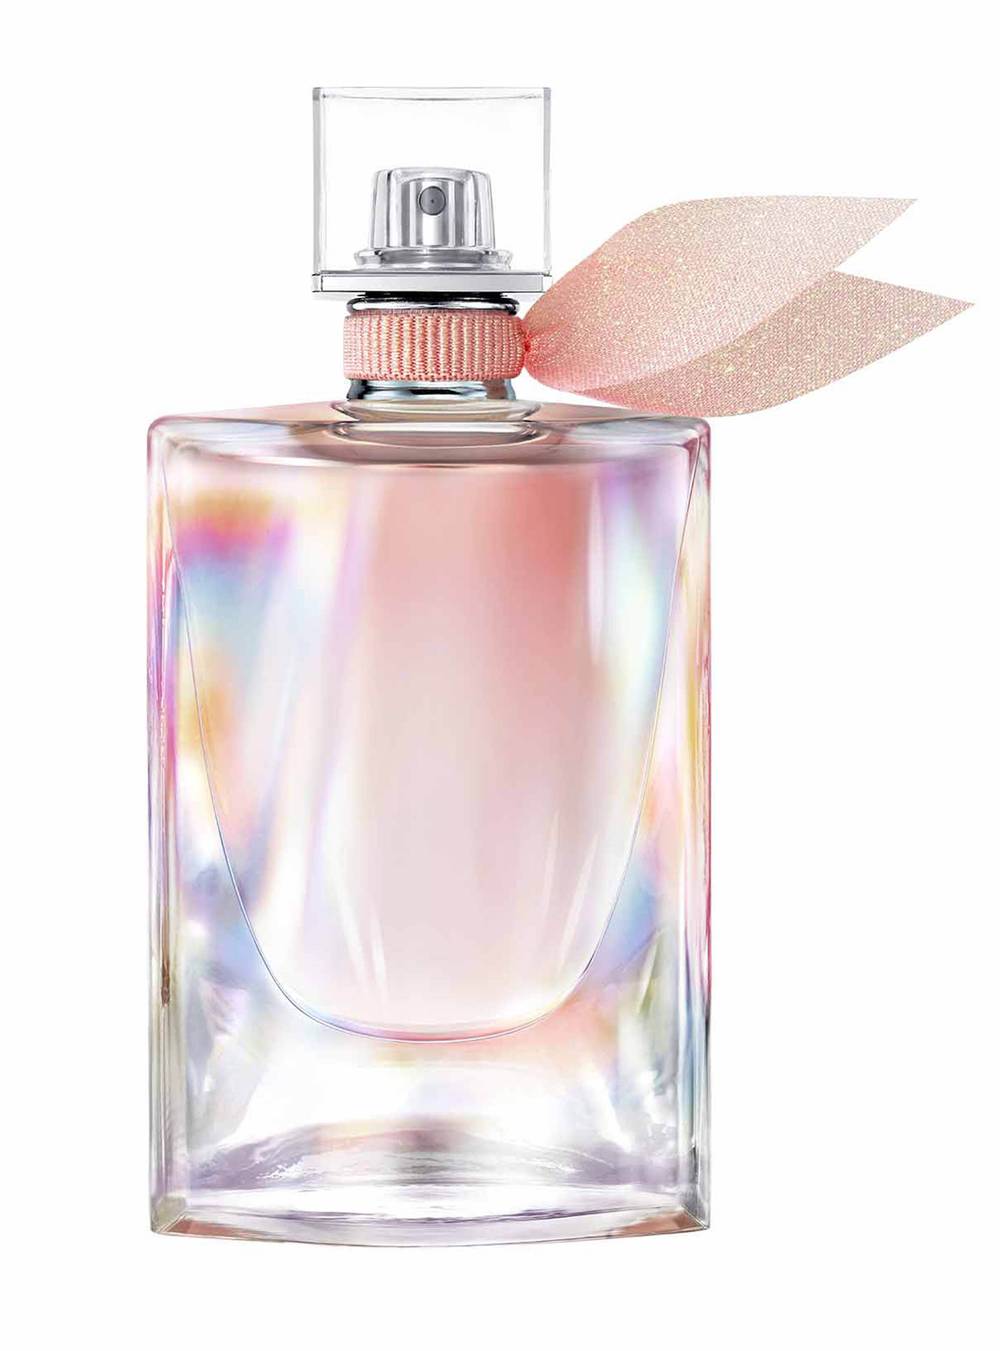 Lancôme perfume la vie est belle soleil cristal edp (botella 50 ml)